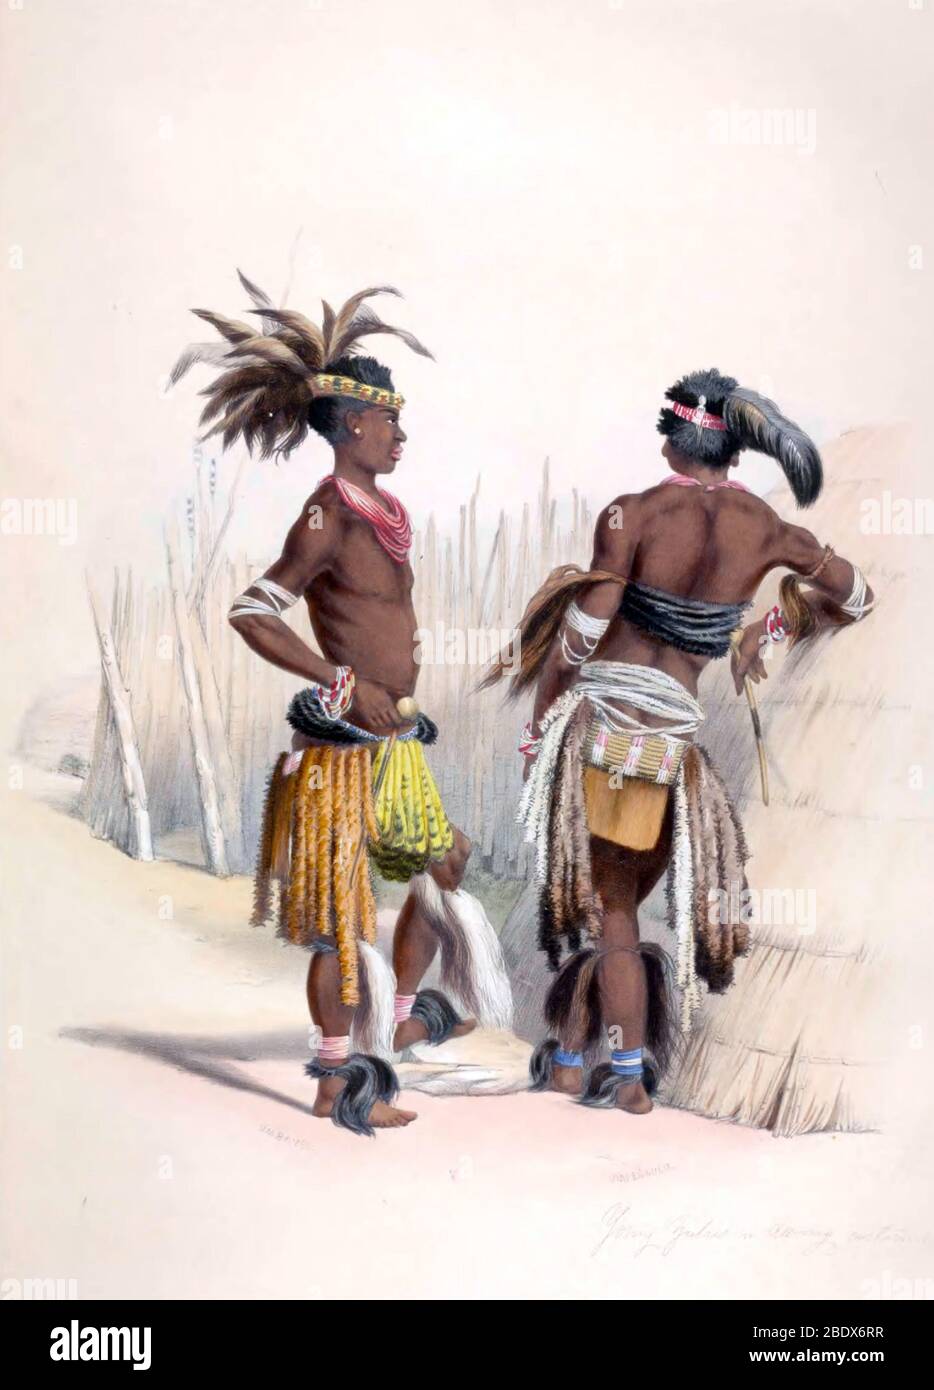 South Africa, Zulu Warriors Dance Costumes, 1840s Stock Photo